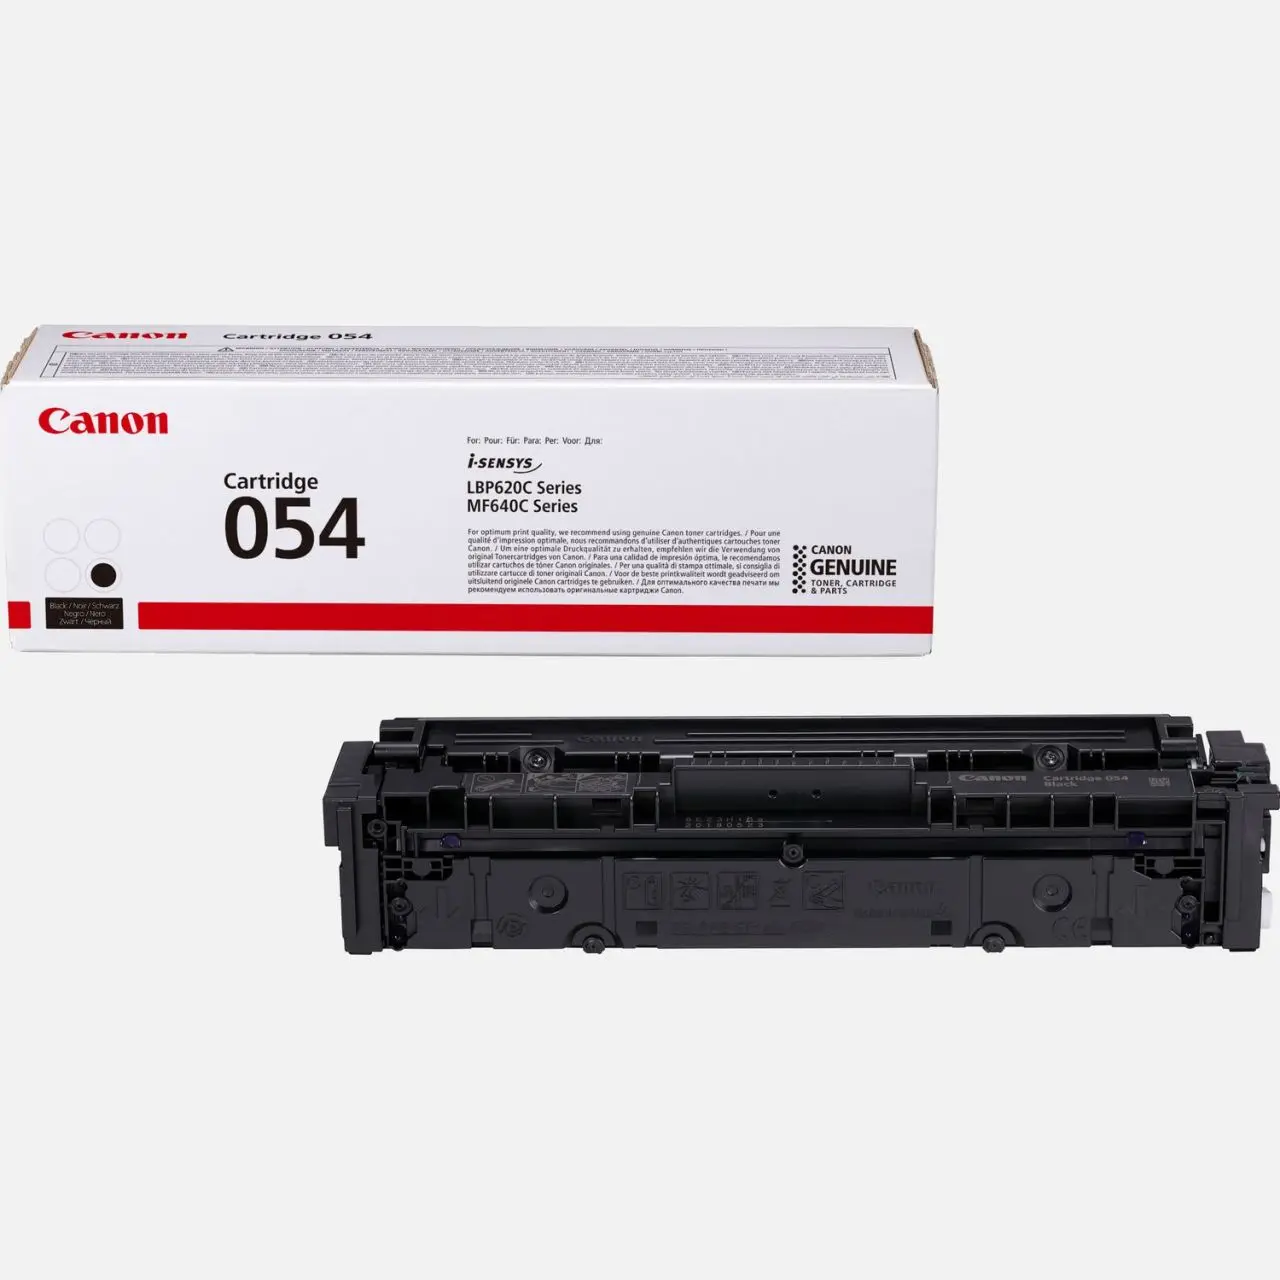 Canon Crg 054 Black Original Toner-Kraft Box Reliable Quality Cost Effective Original Cartridge Full Potty